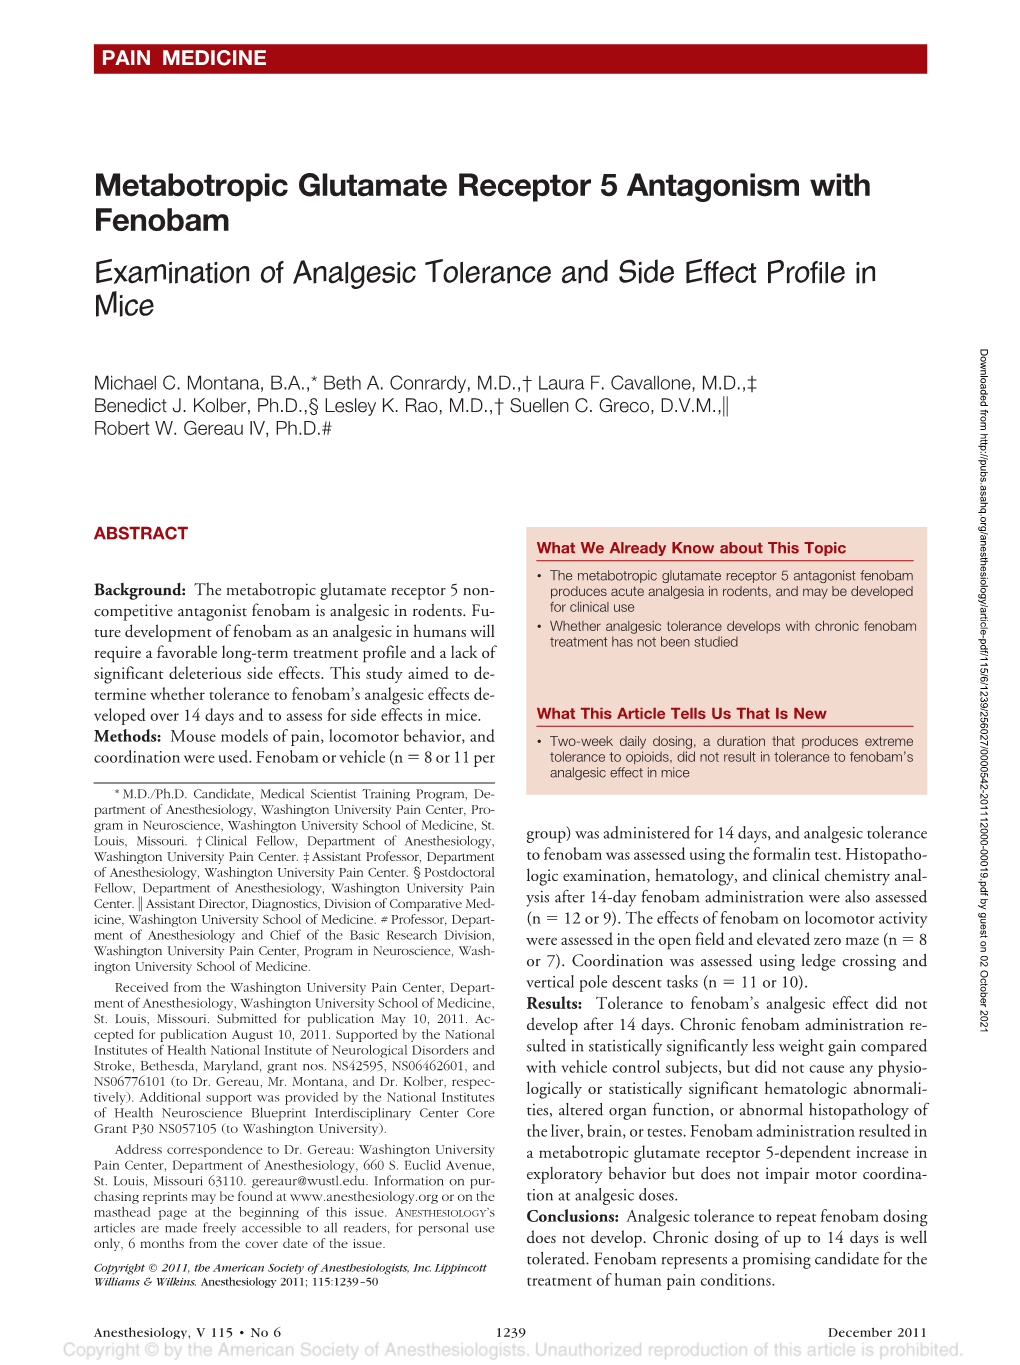 Metabotropic Glutamate Receptor 5 Antagonism with Fenobam